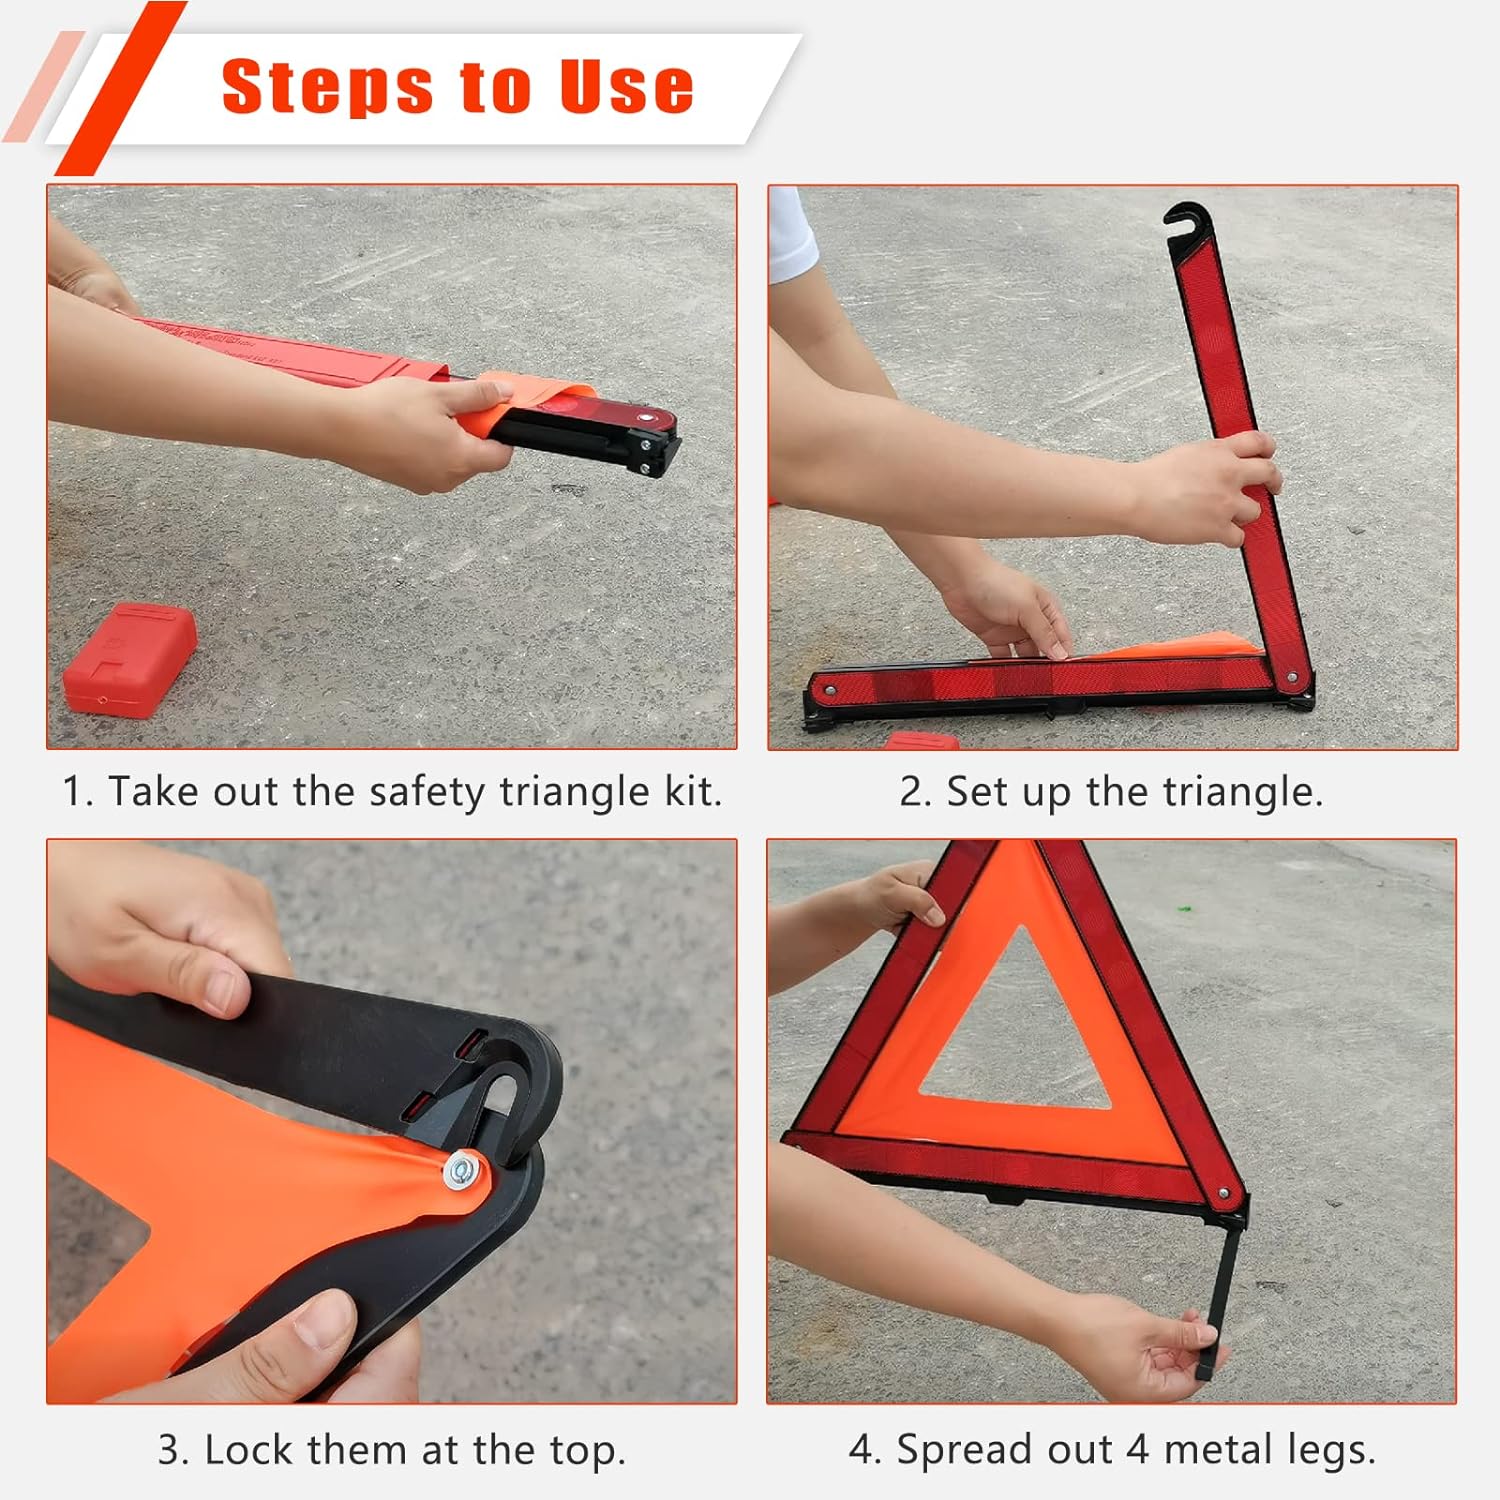 ATP Triangle Warning Frame Triangle Emergency Warning Triangle Reflector Safety Triangle Kit 3 Pack